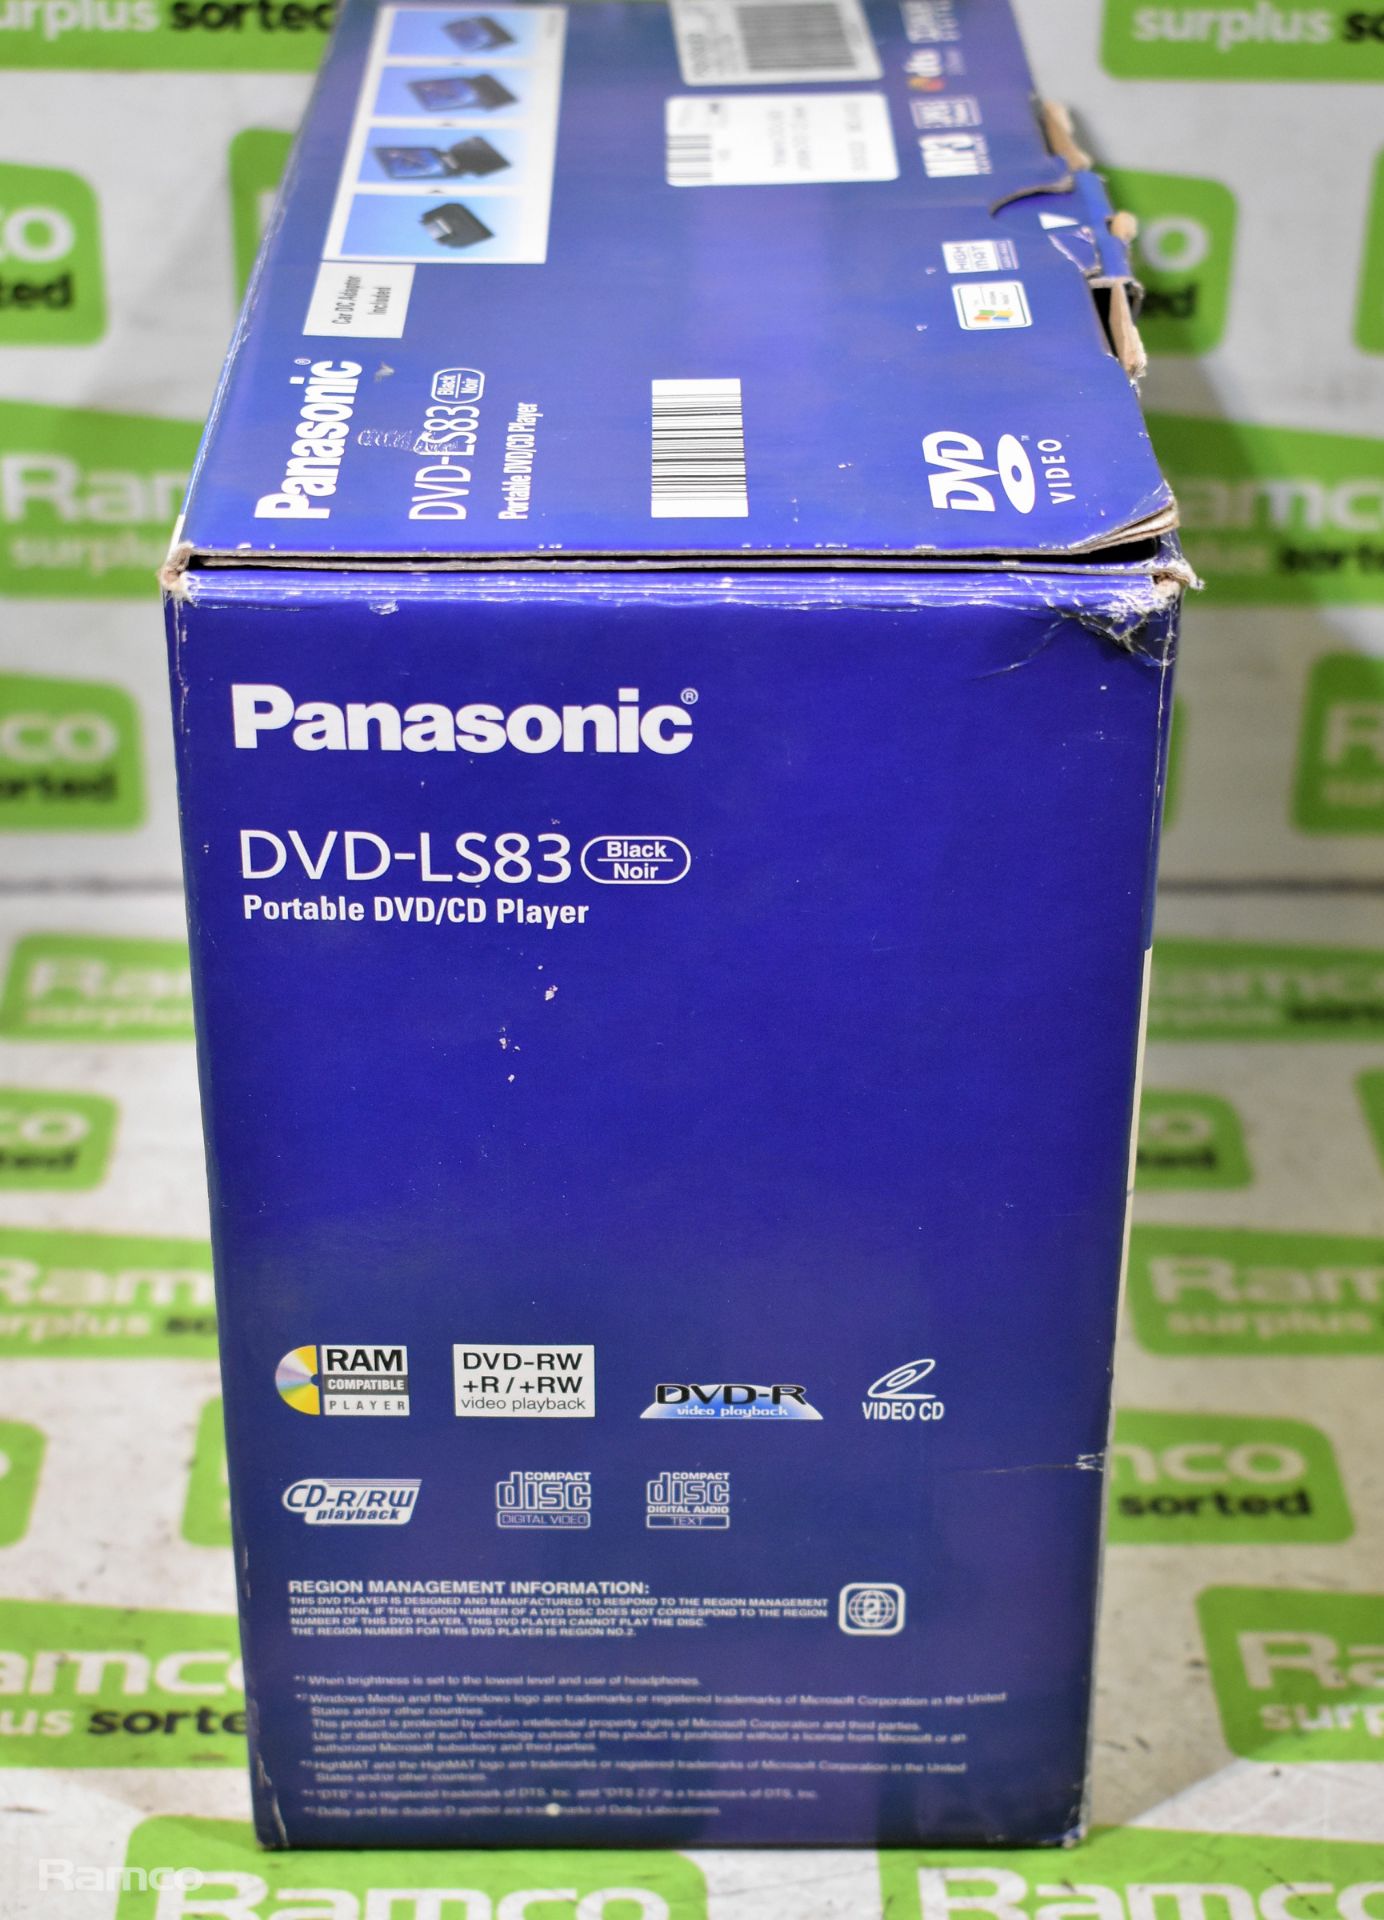 Panasonic DVD-LS83 portable DVD / CD player - Image 8 of 8